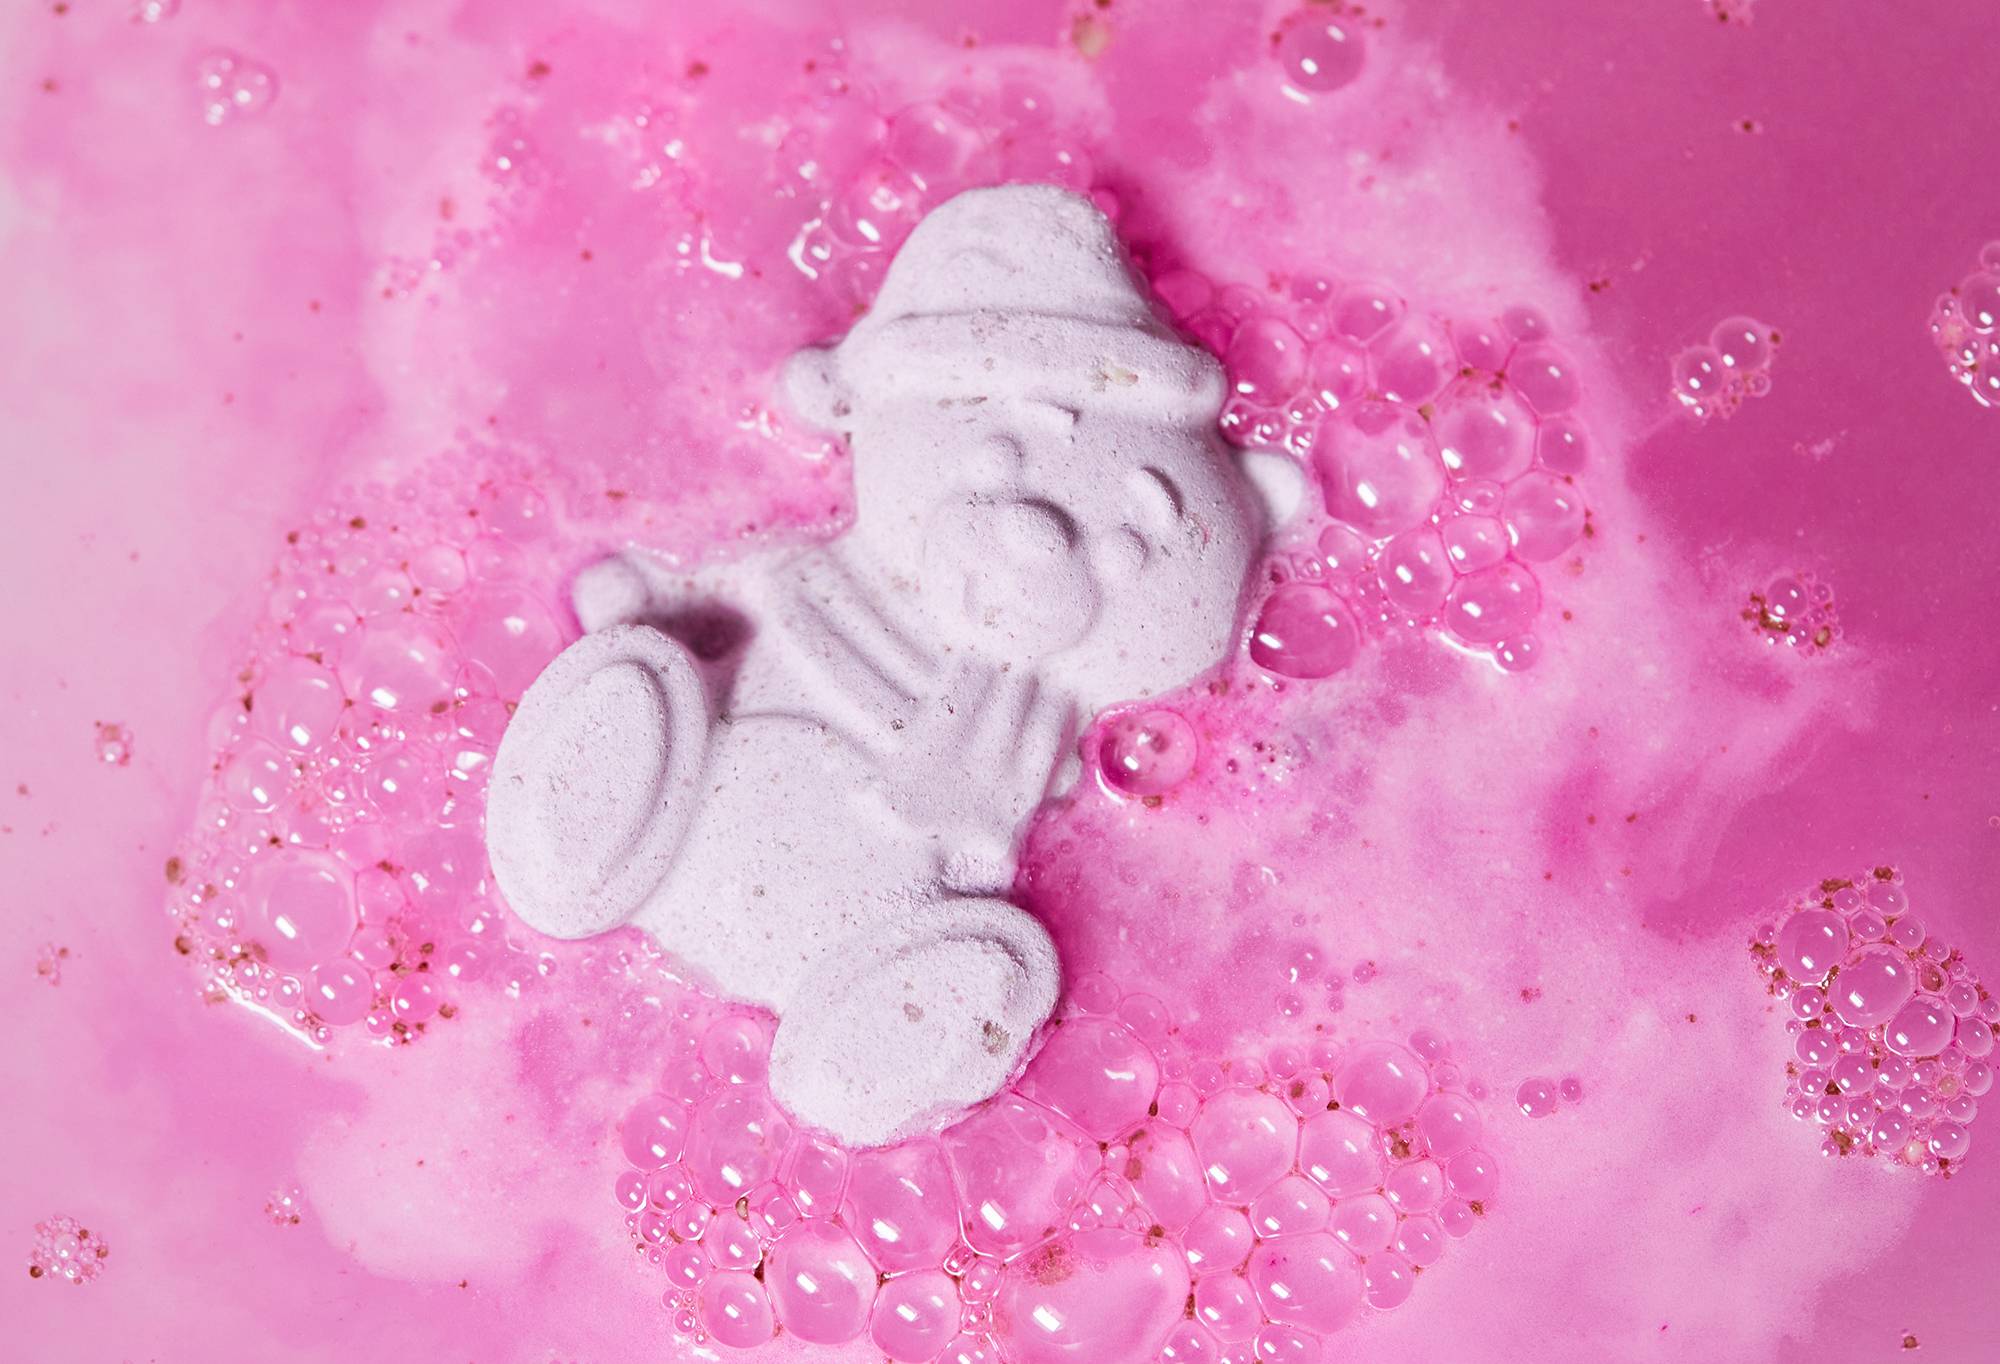 Butterbear floats among vibrant, hot-pink foamy waters. 